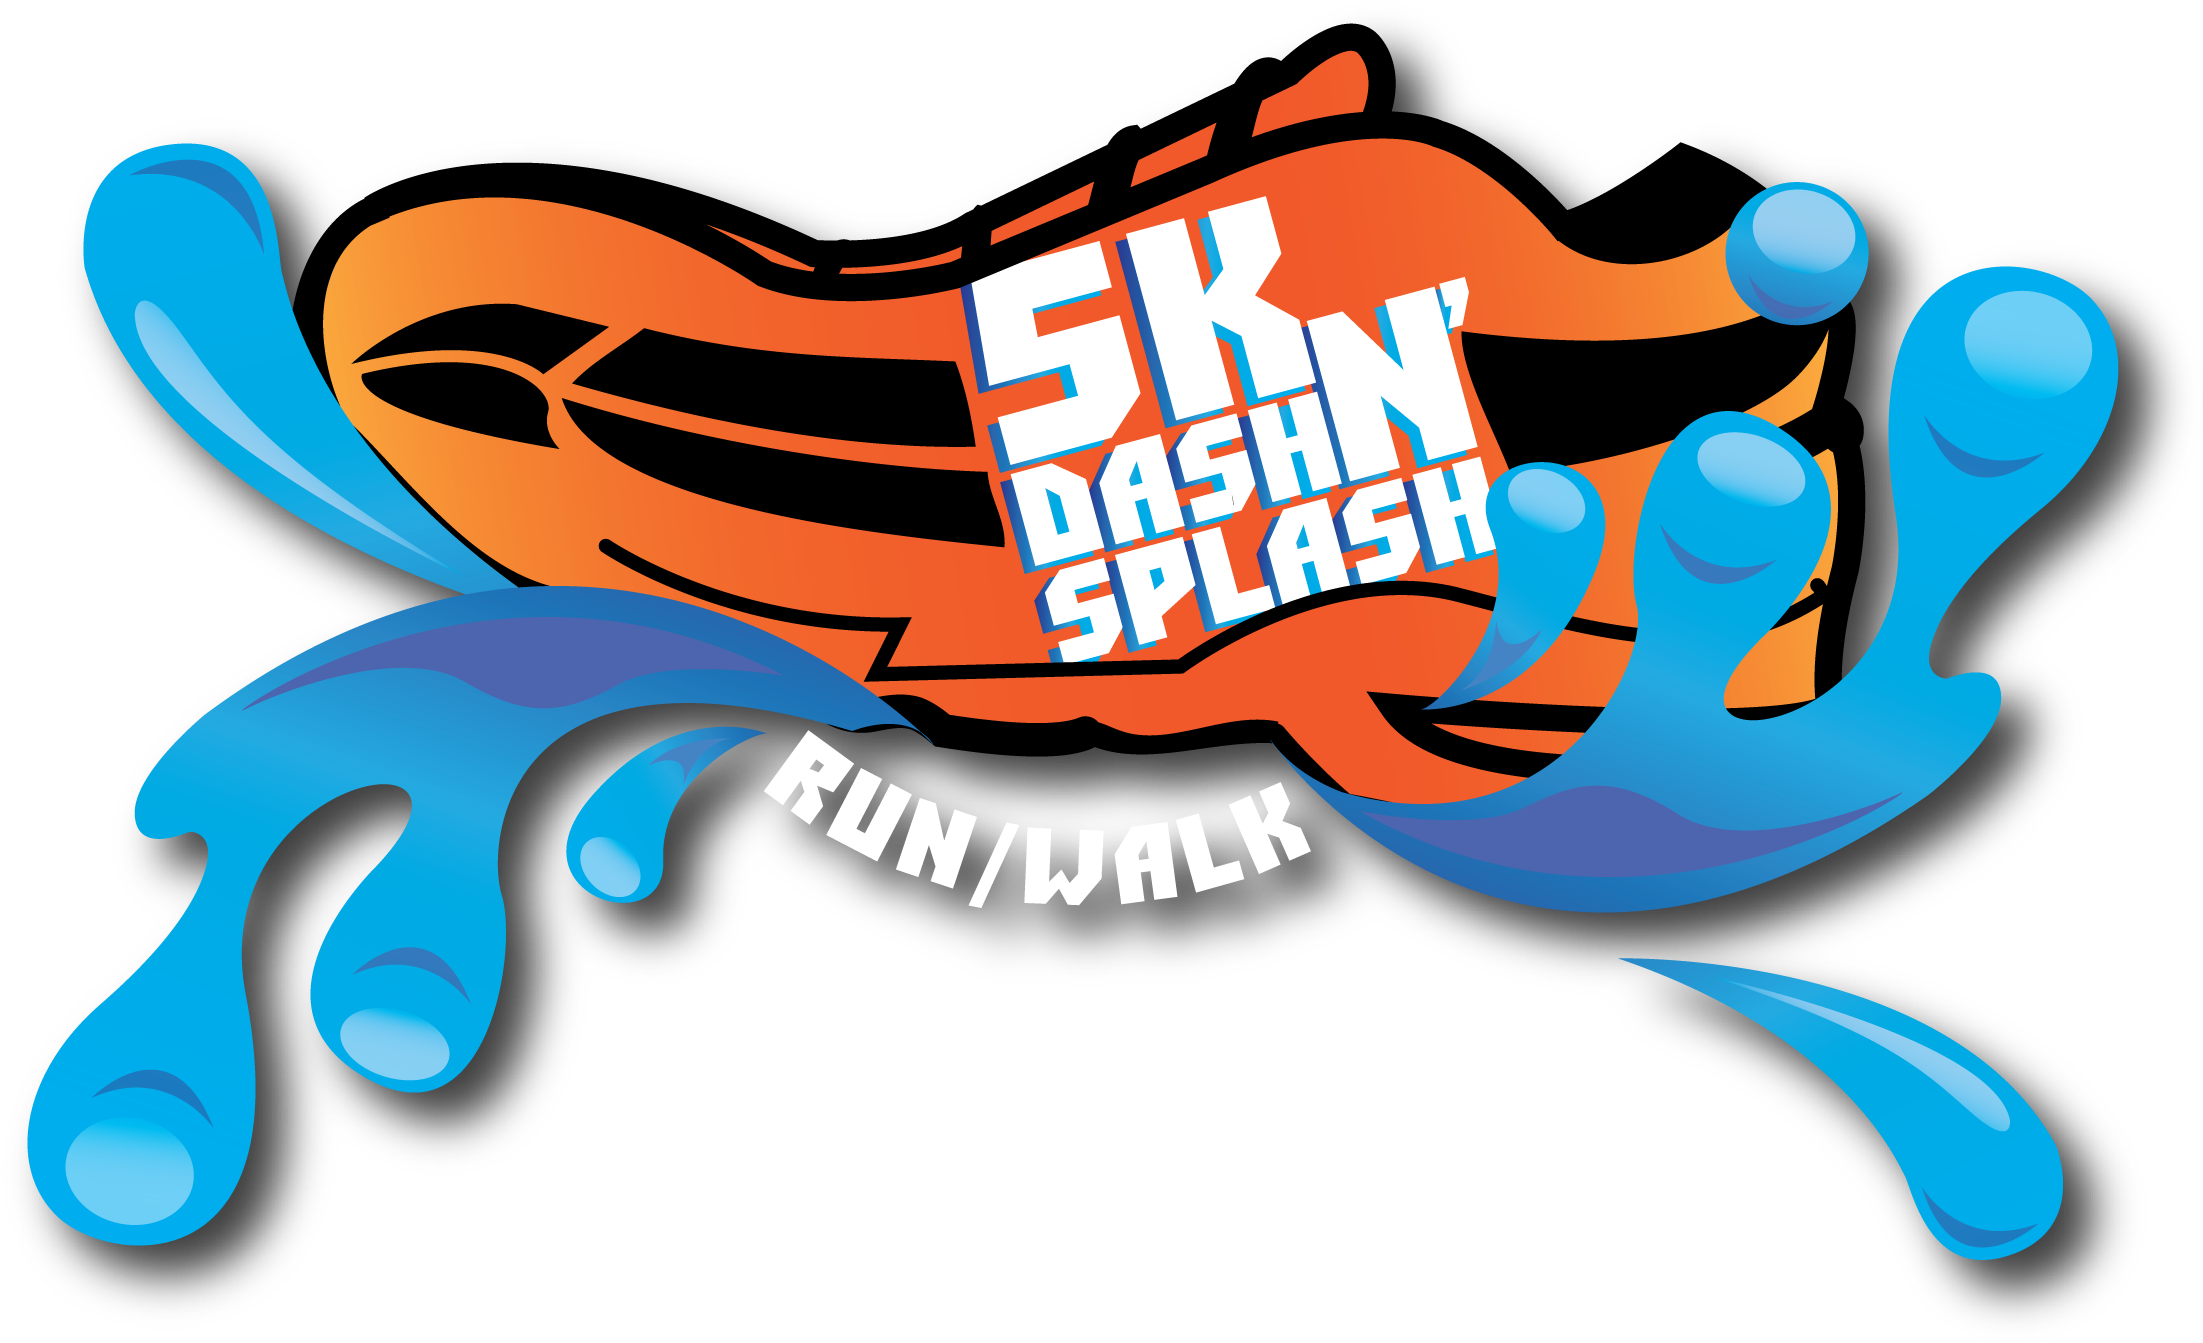 5k Dash N' Splash - 5k Dash N' Splash (2352x1484)